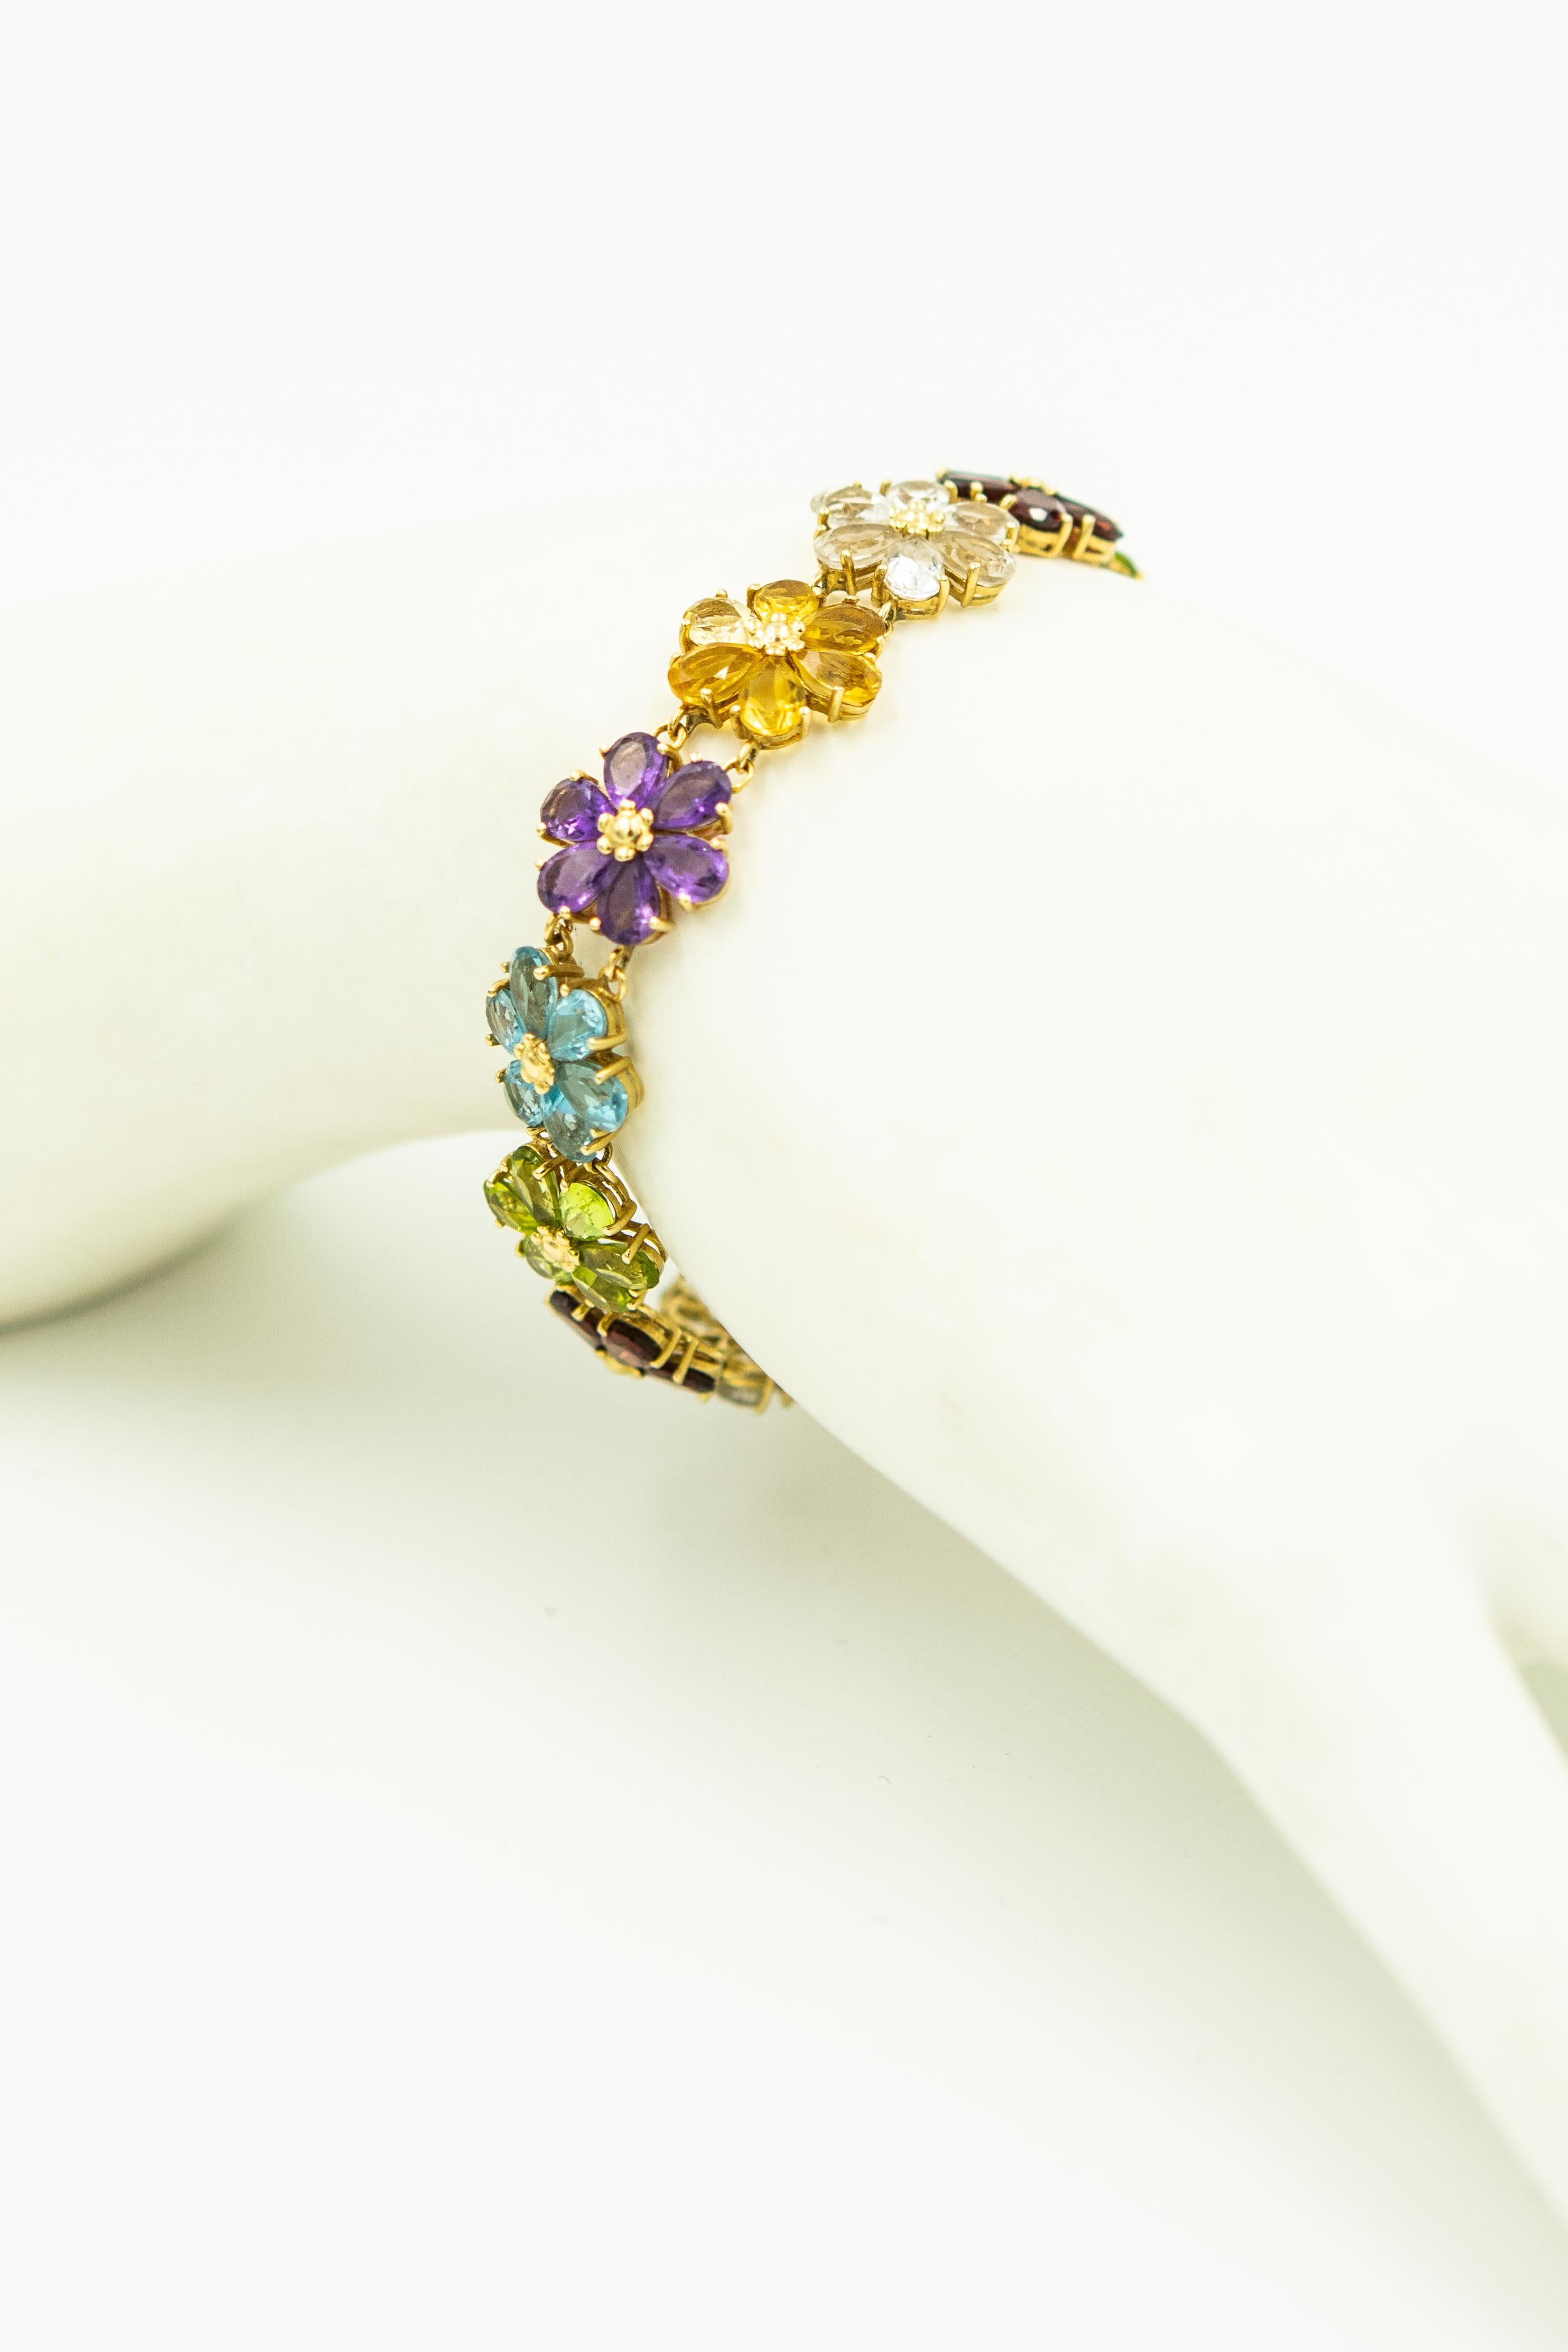 1970s Semi Precious Gemstone Gold Flower Bracelet Earrings Ring and Pendant Set 11